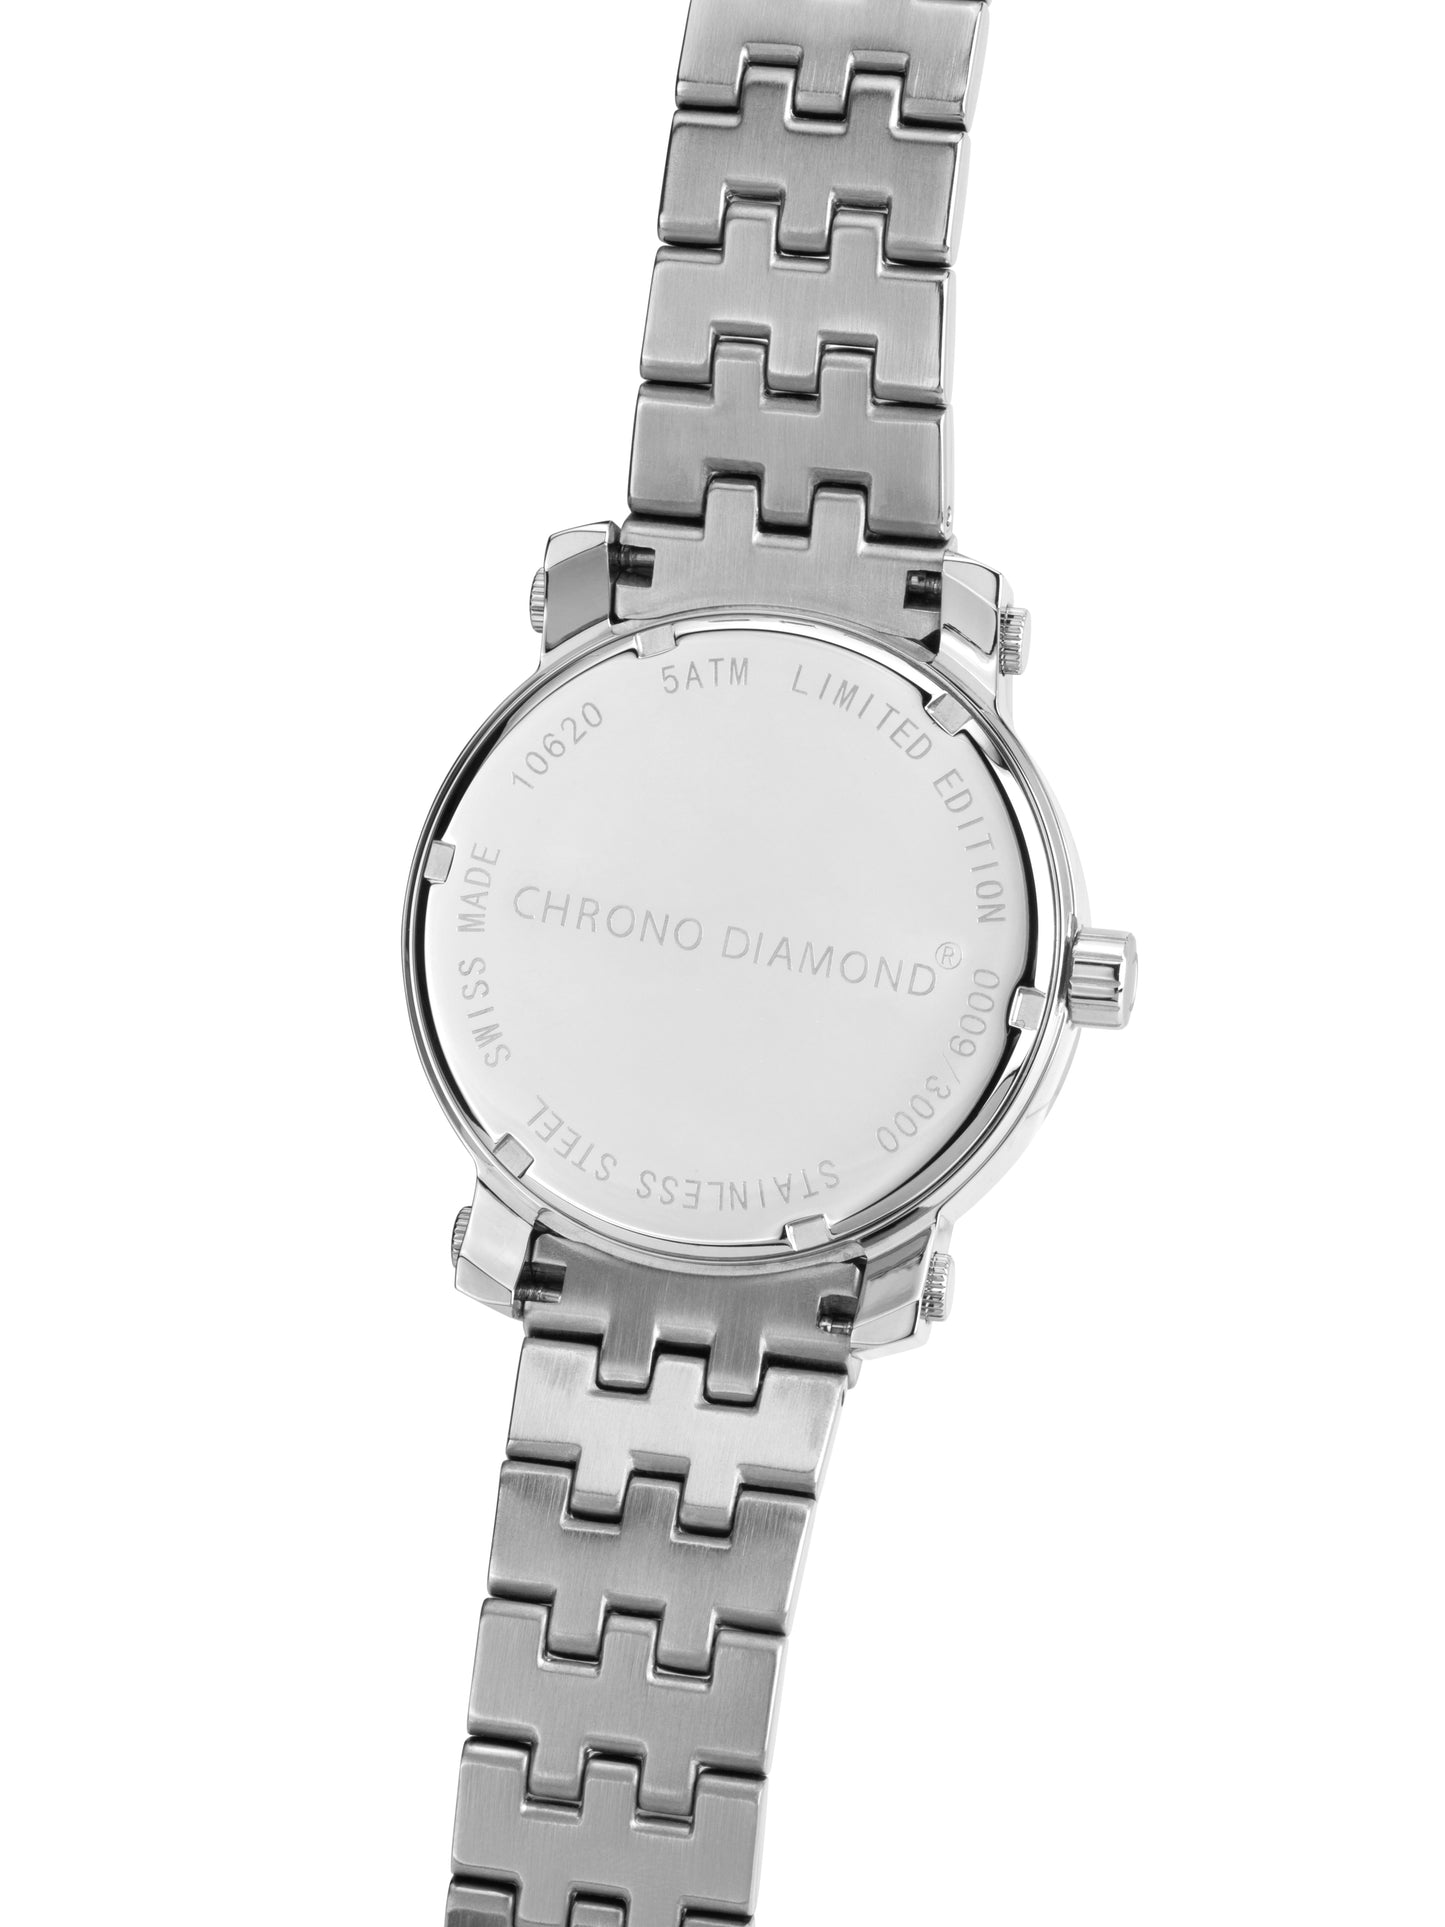 Automatic watches — Nestorius — Chrono Diamond — steel silver